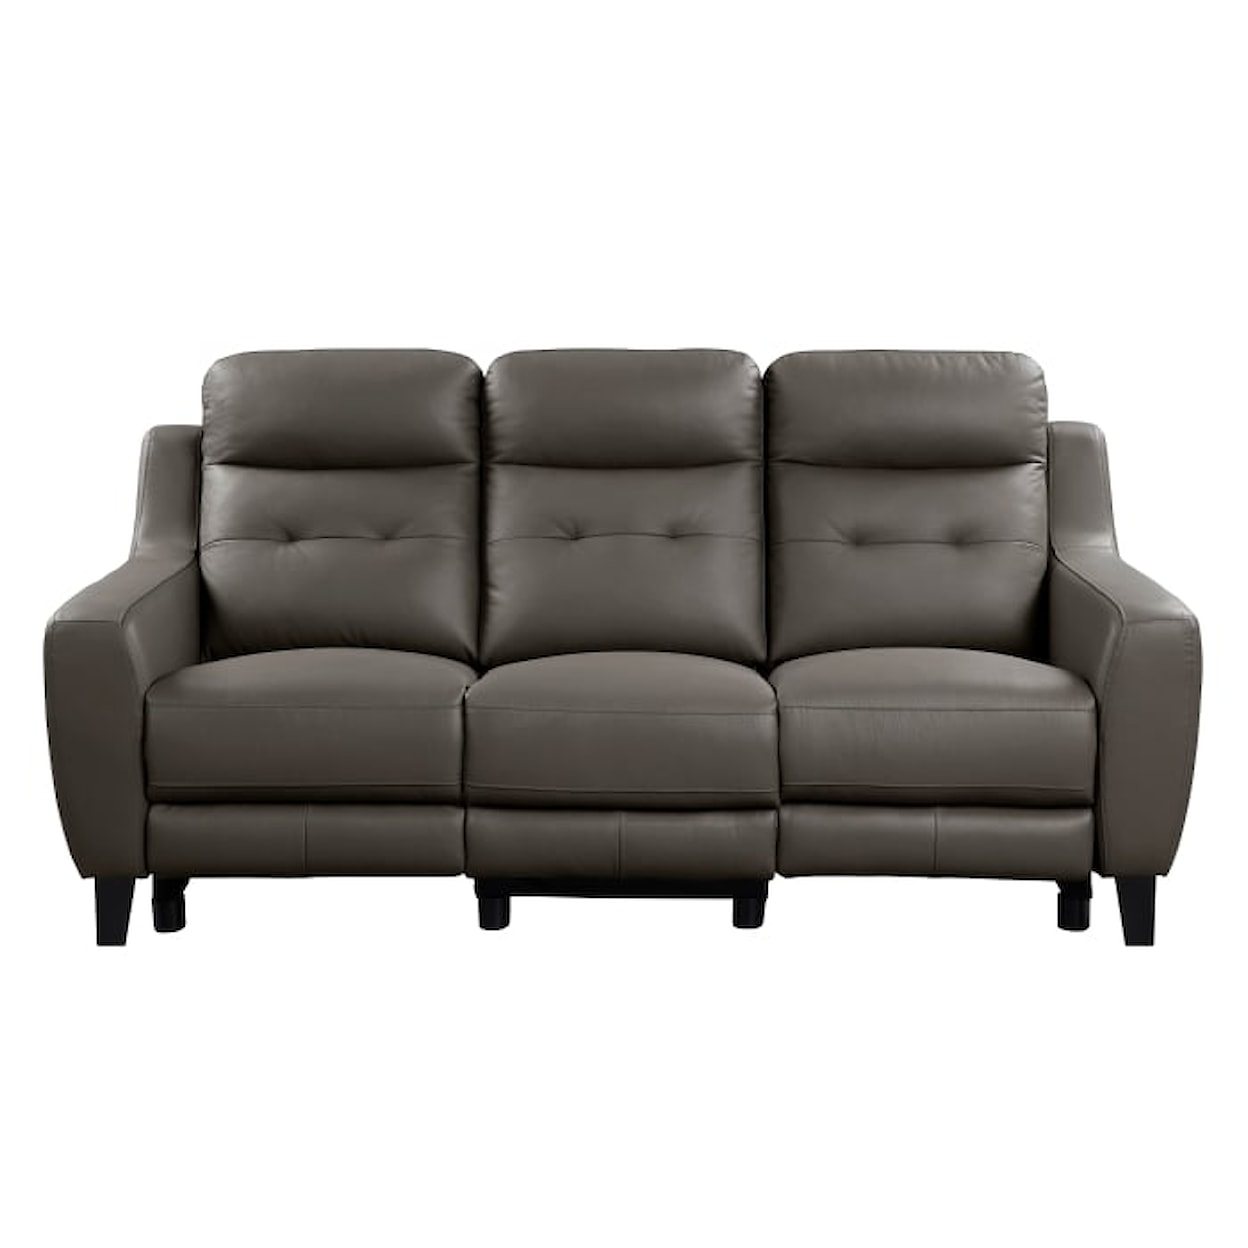 Homelegance Conrad Double Reclining Sofa